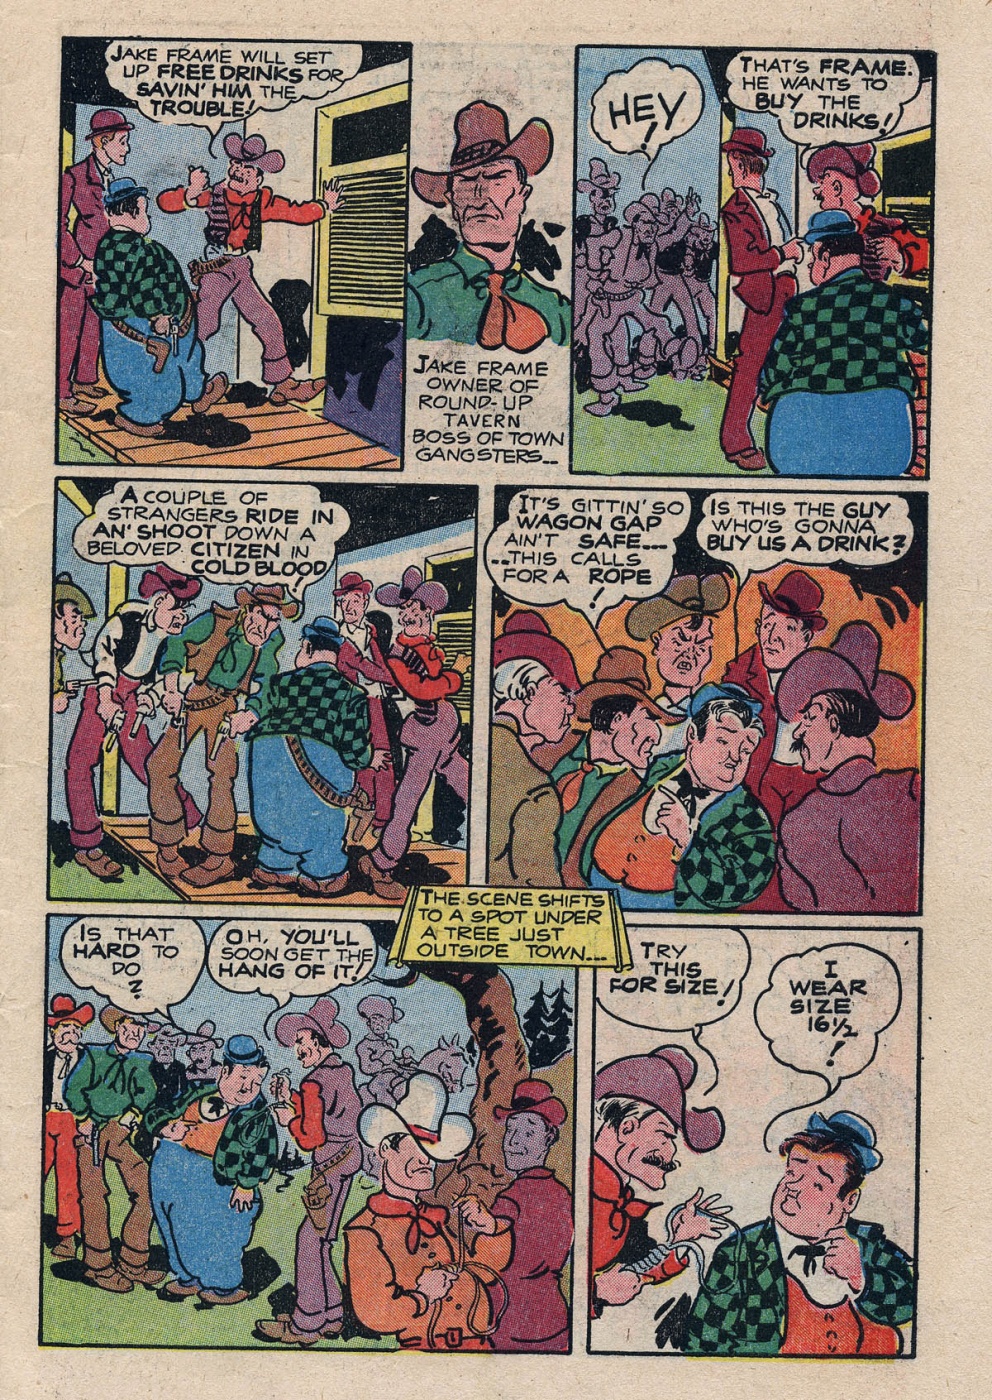 Funny Comic Strips - Abbott and Costello 001 (Feb 1948) 7